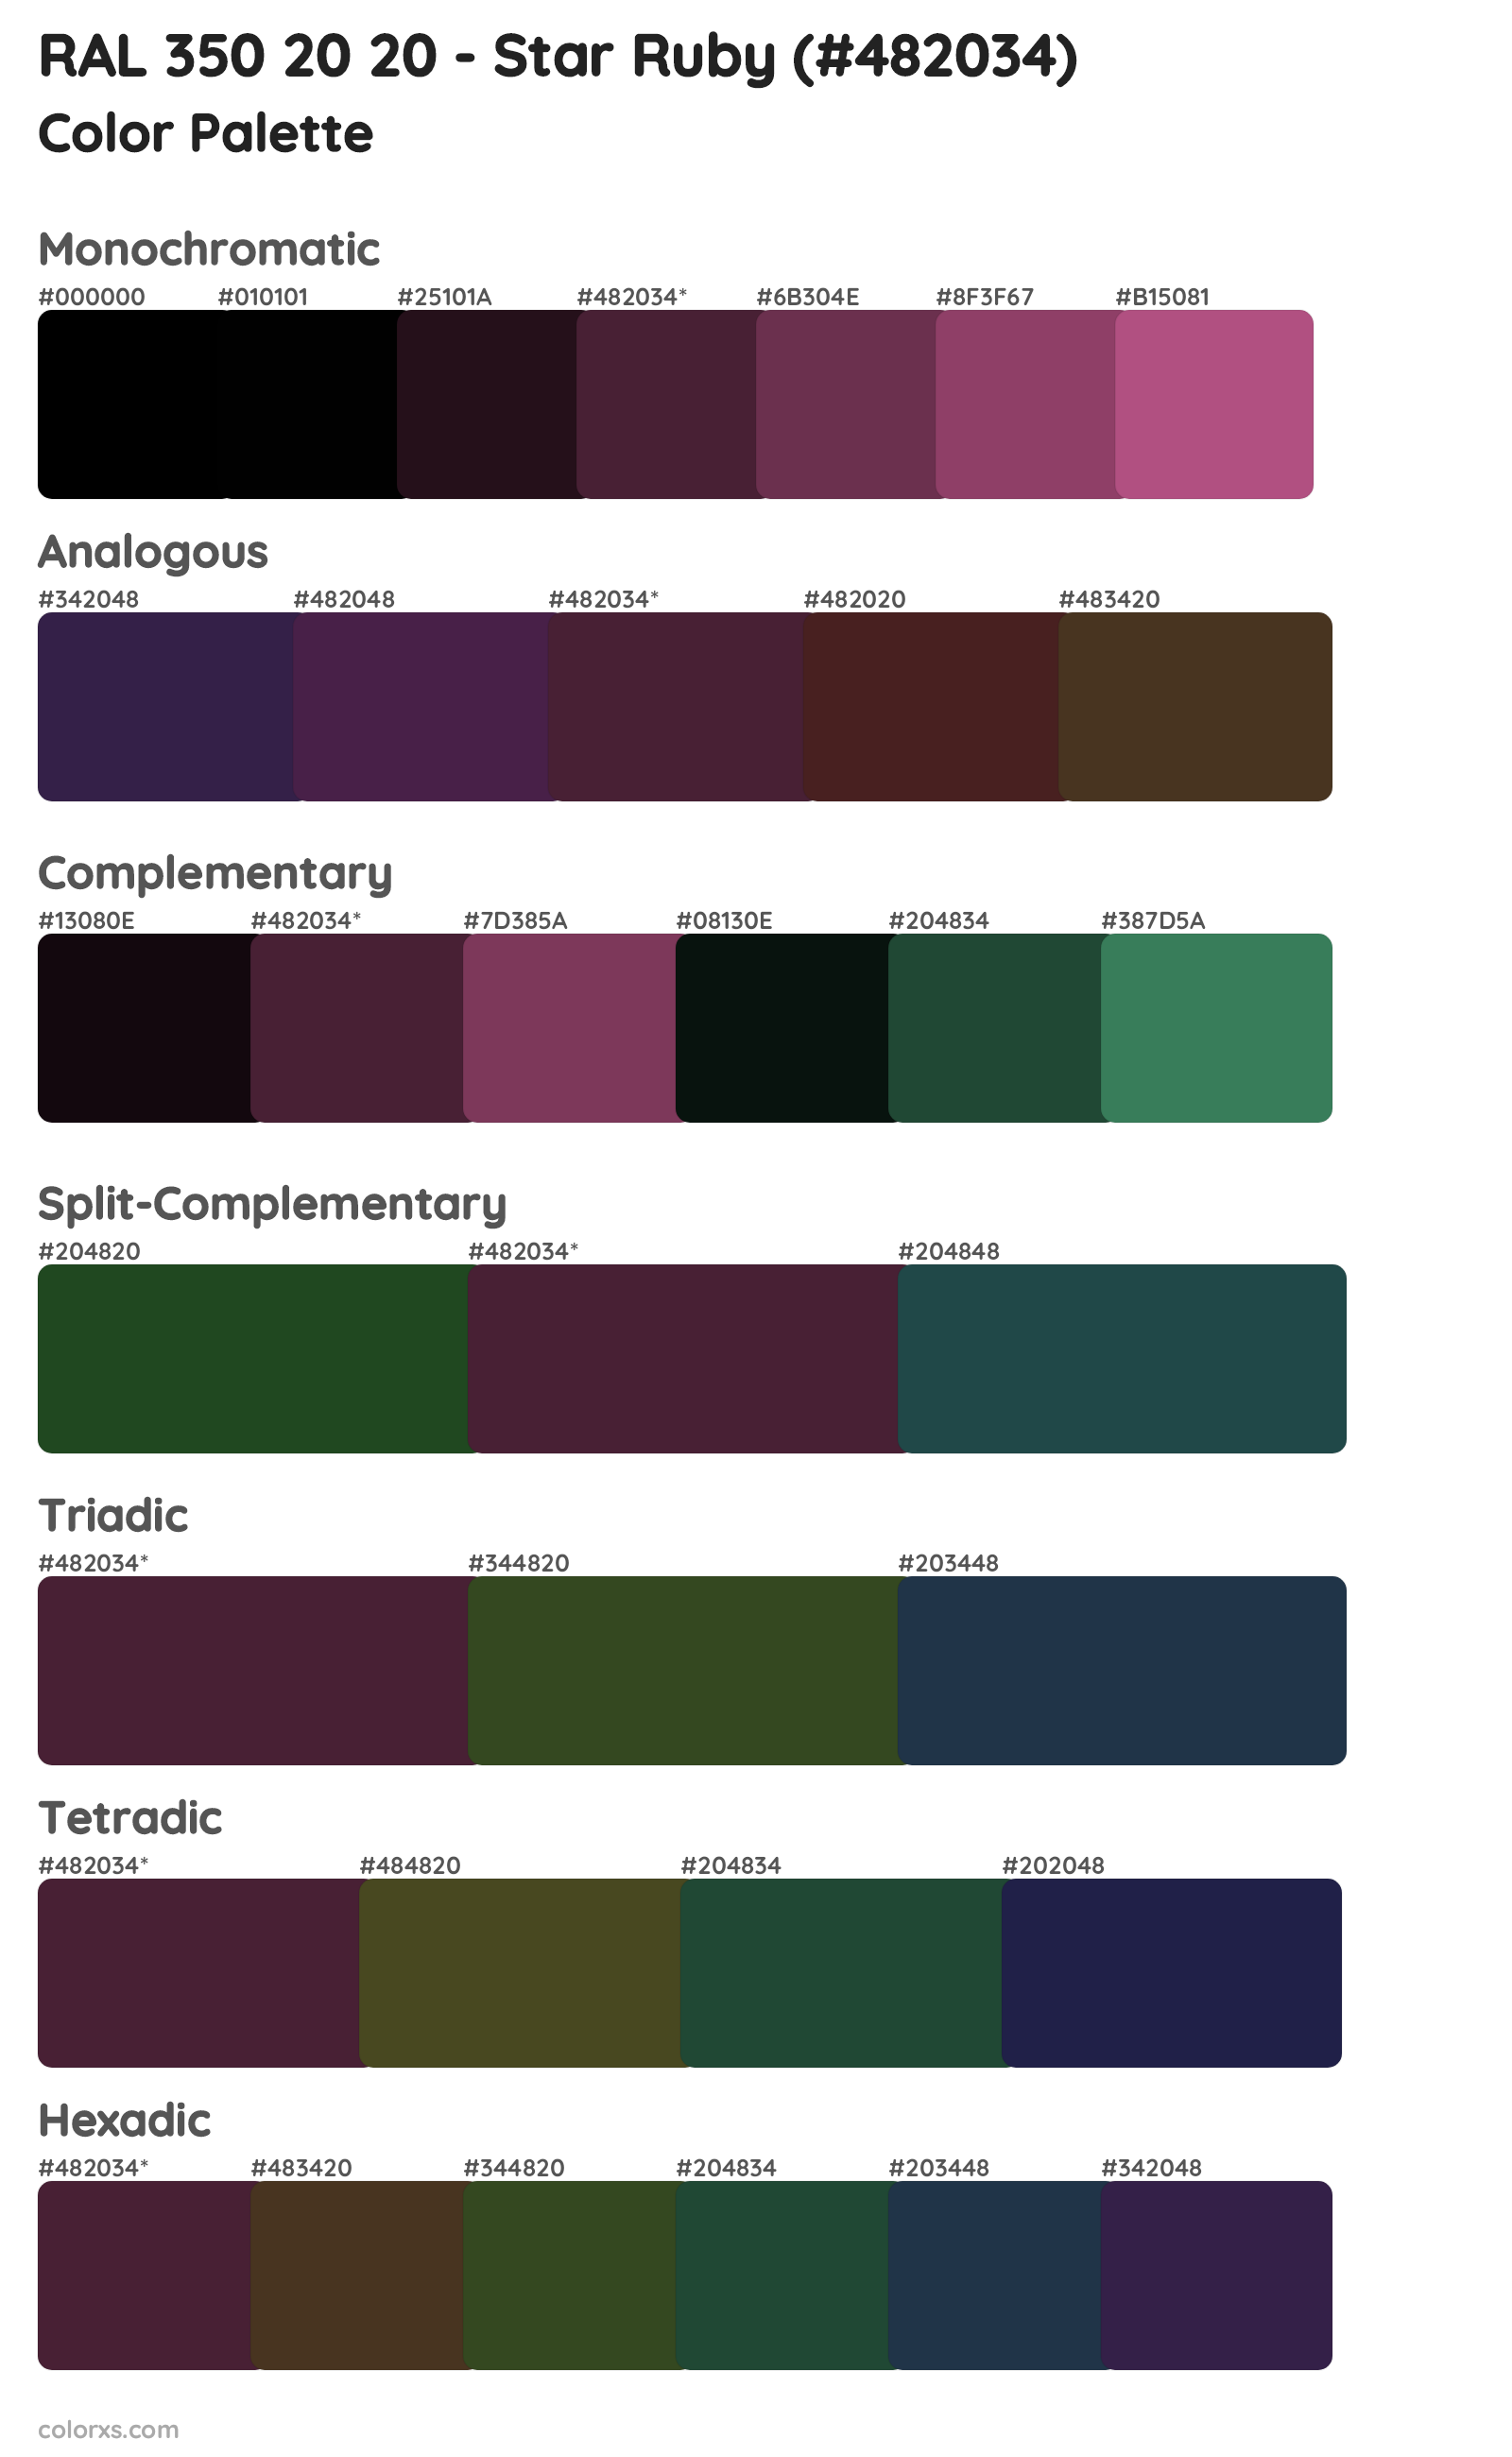 RAL 350 20 20 - Star Ruby Color Scheme Palettes